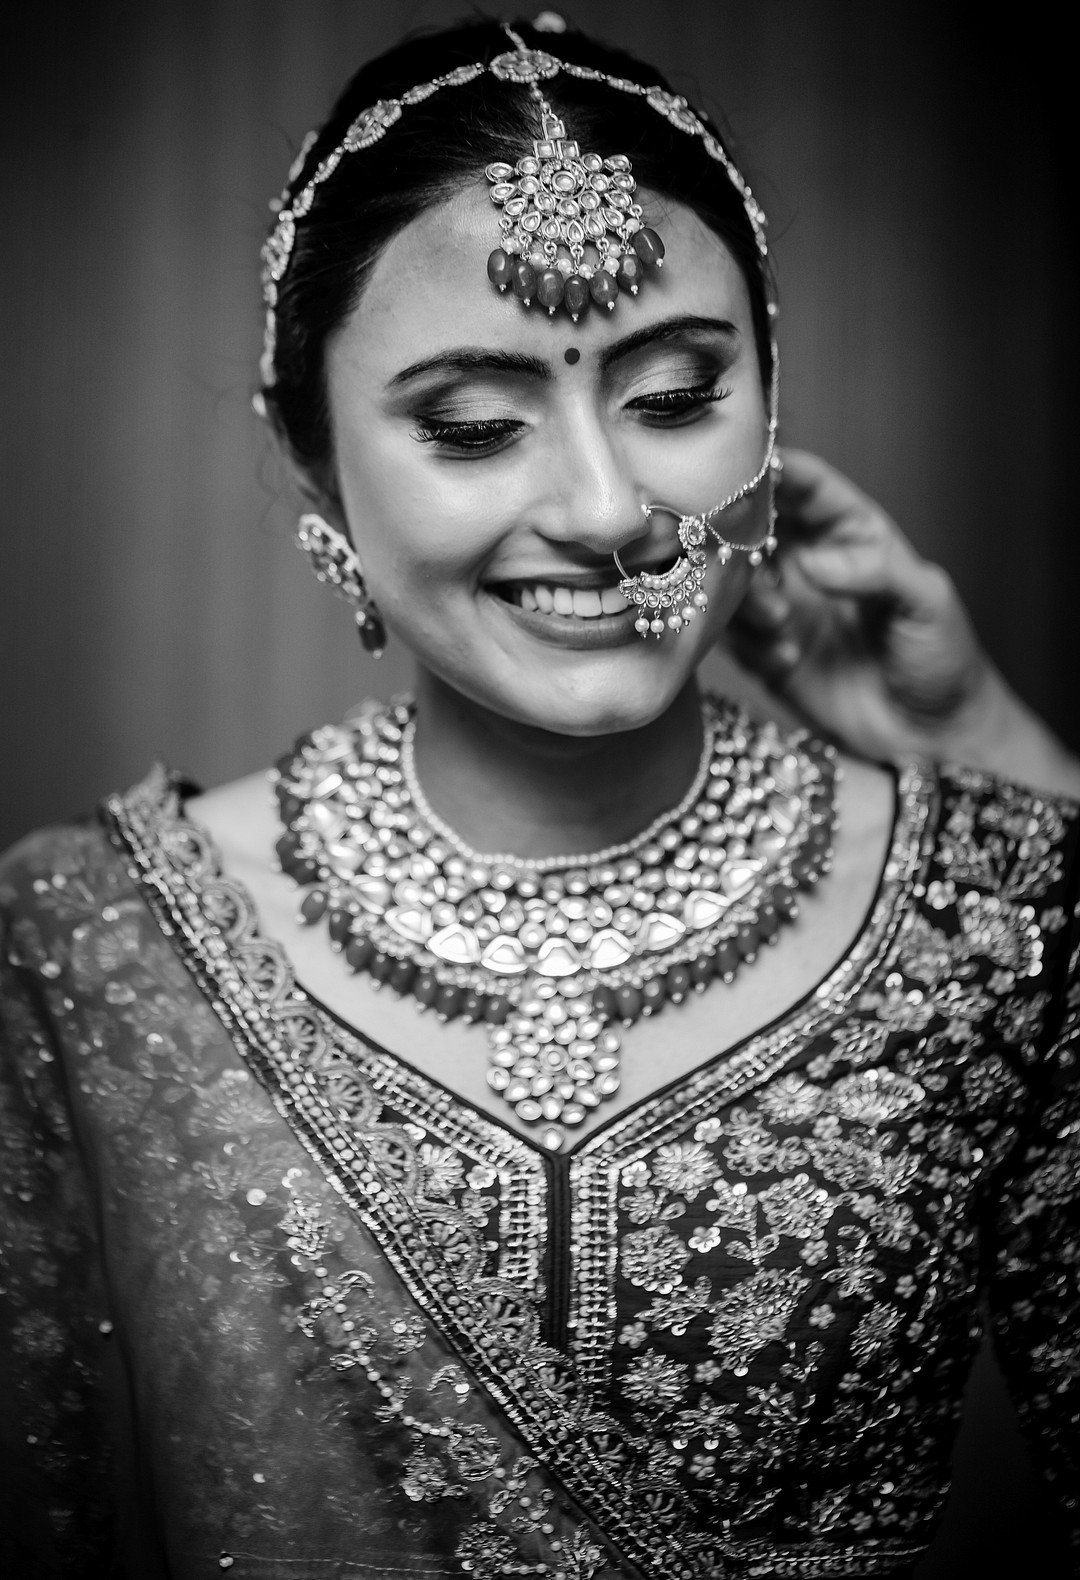 Modi_Shah_DARS Photography_017 Krina & Parth's Wedding by DARS Photography_low.jpg